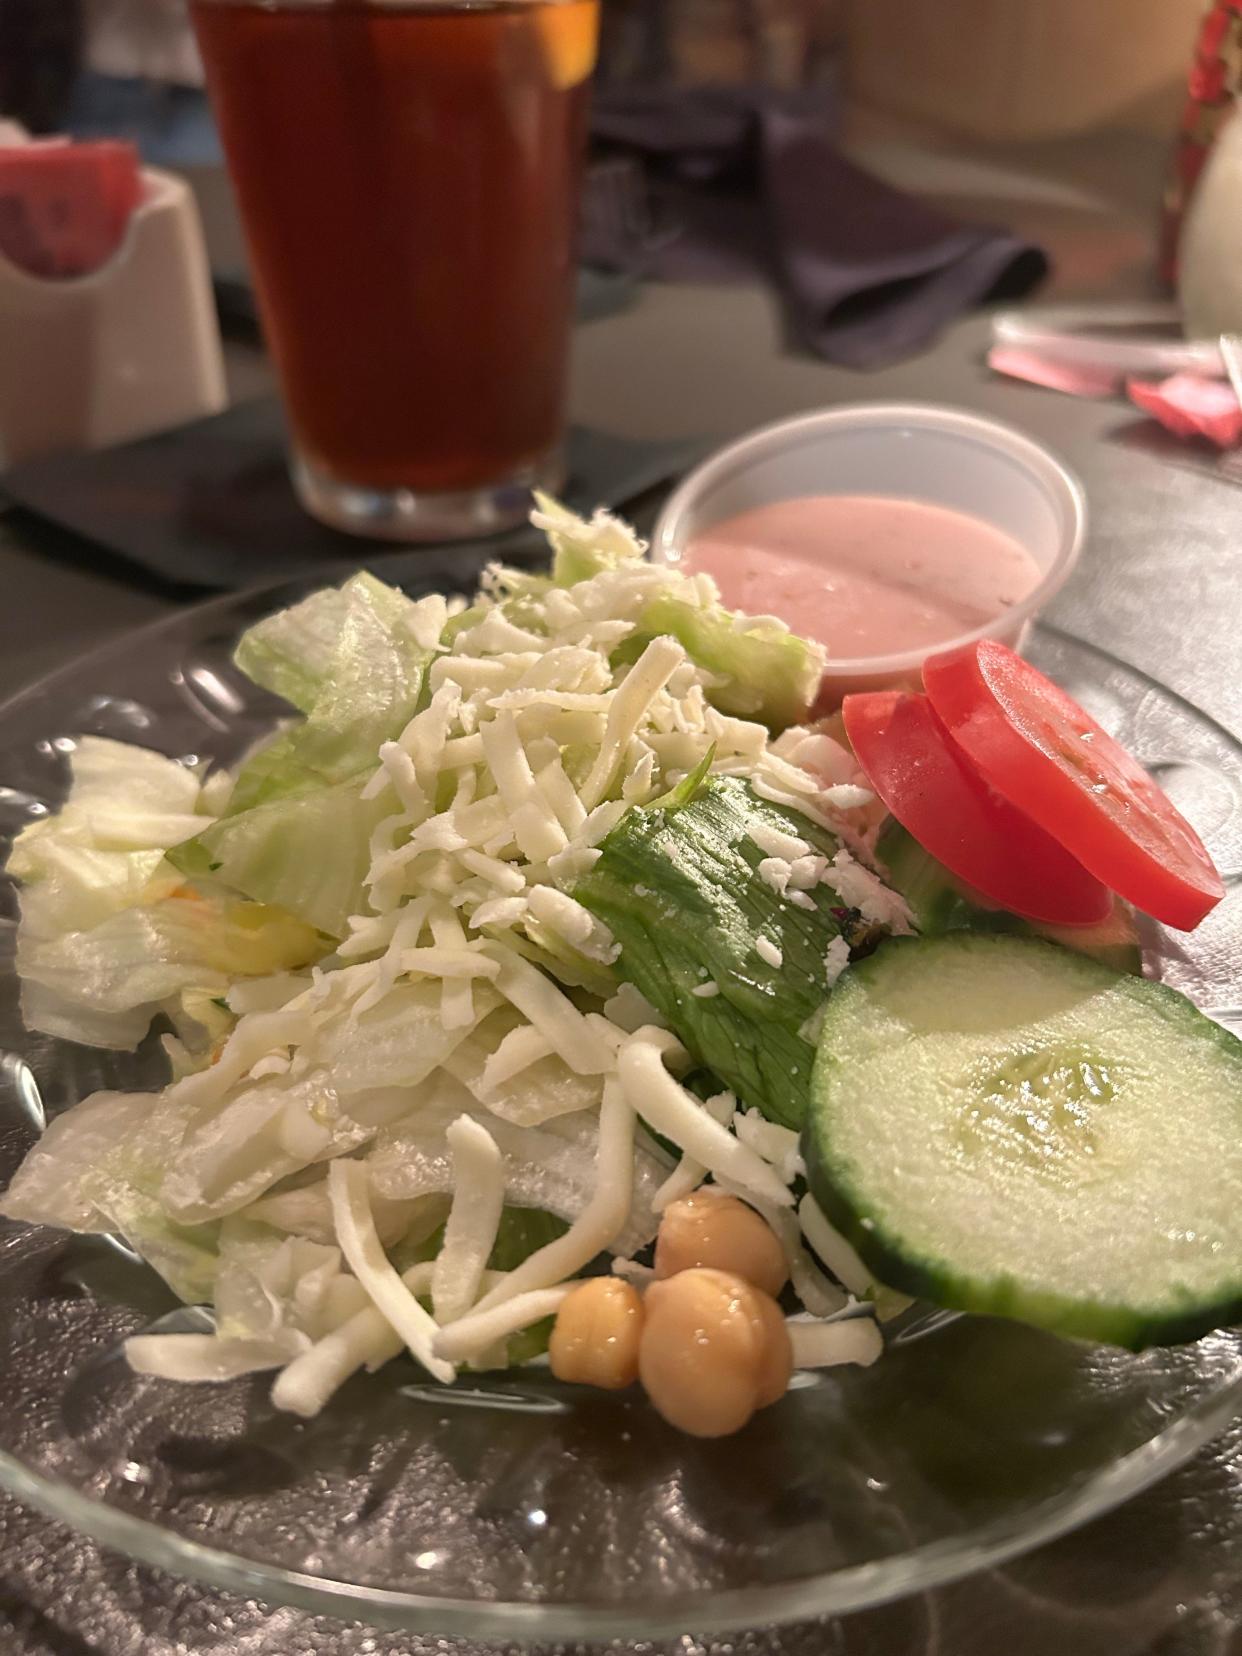 A dinner side salad at Santosuosso's Italian restaurant.